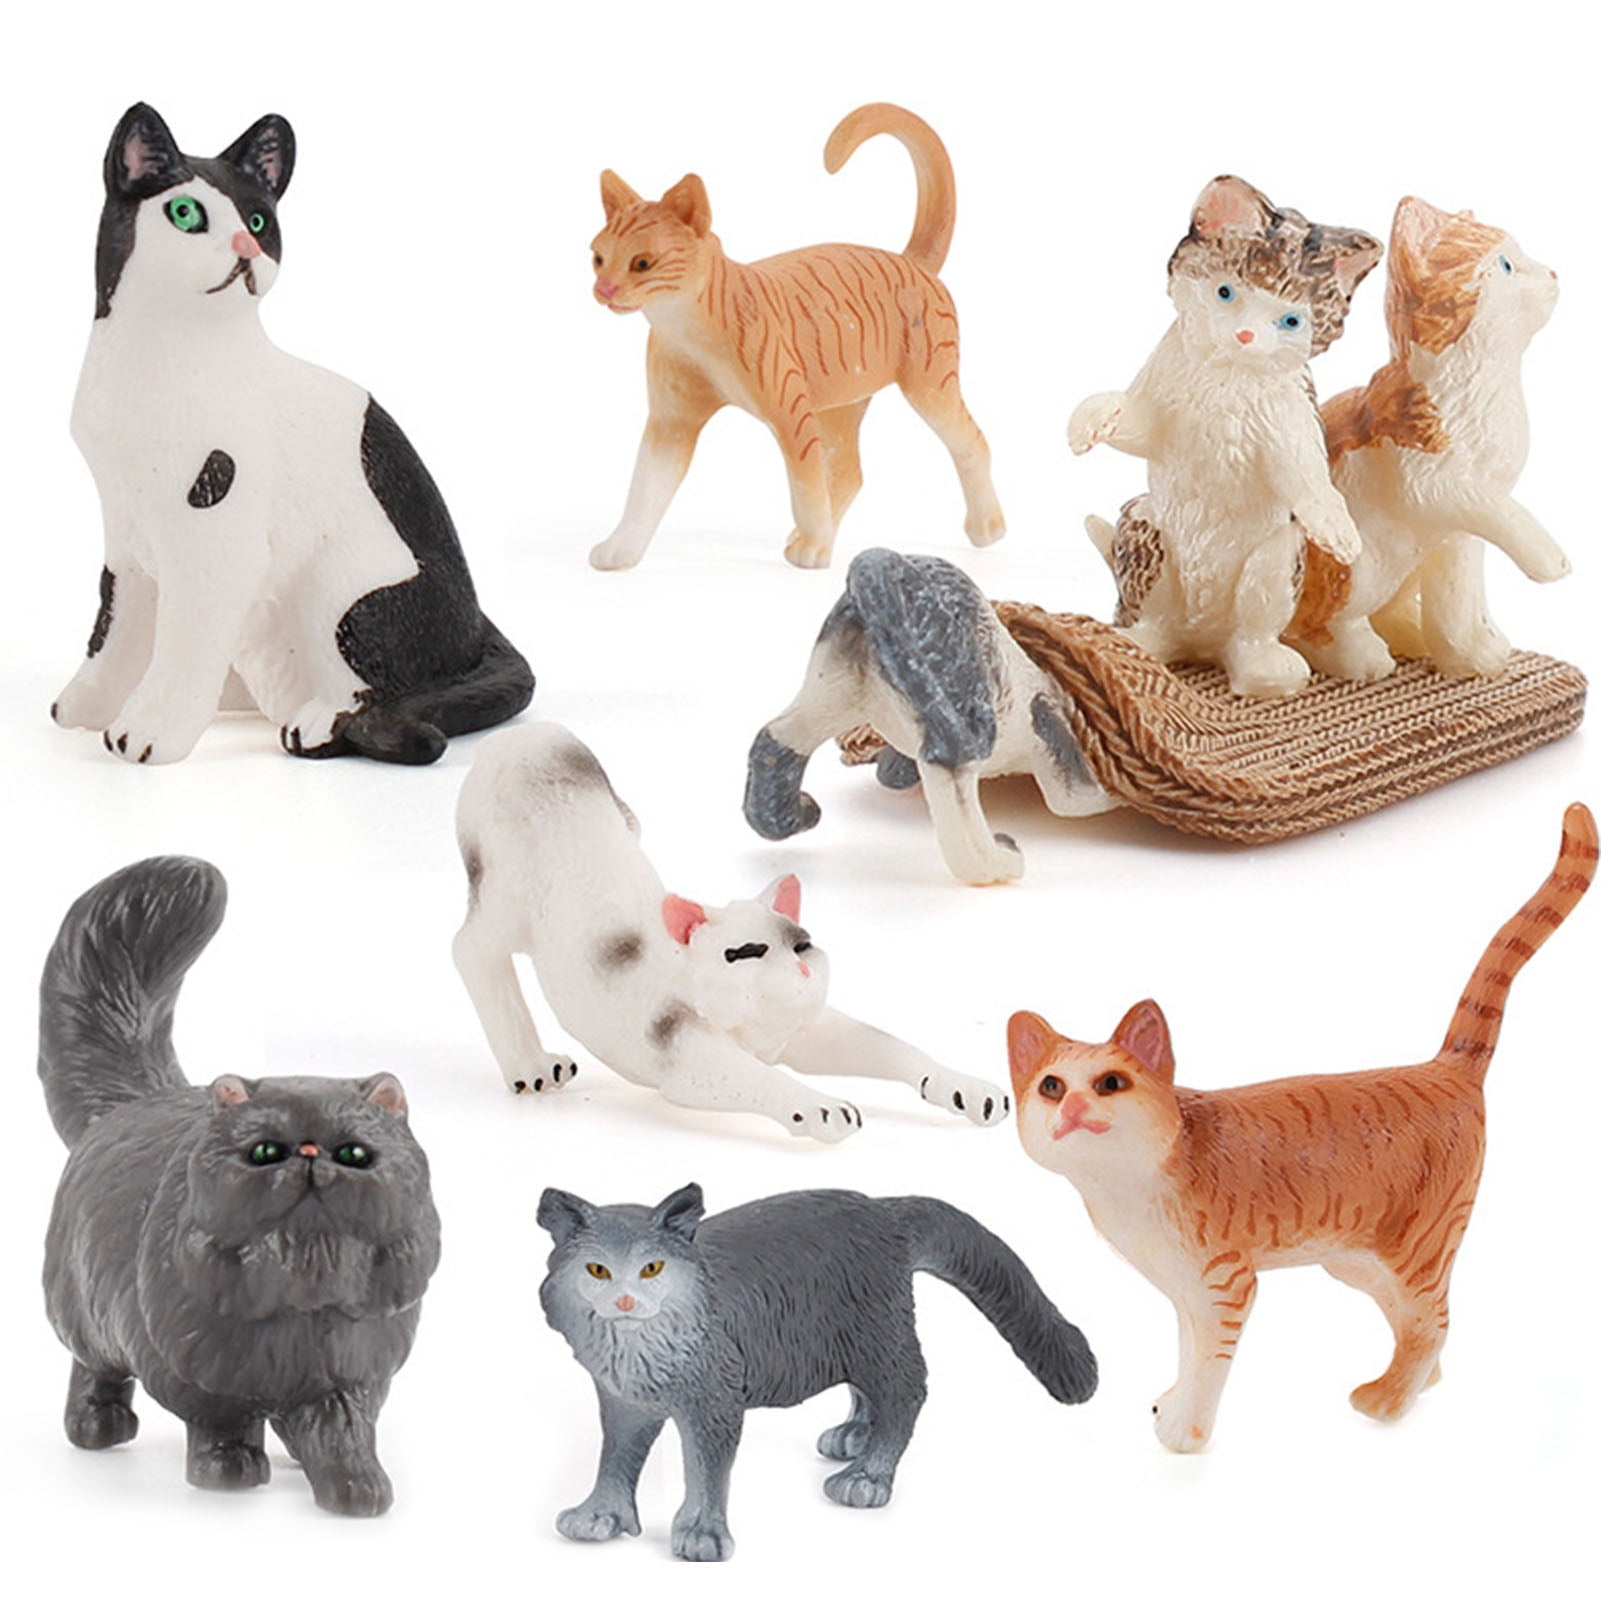 Sleeping Cat Miniature Figurines-handmade|table top display|keepsake|pet loss|cat lovers gift|White cat|Calico|tortoise shell|Custom Cat